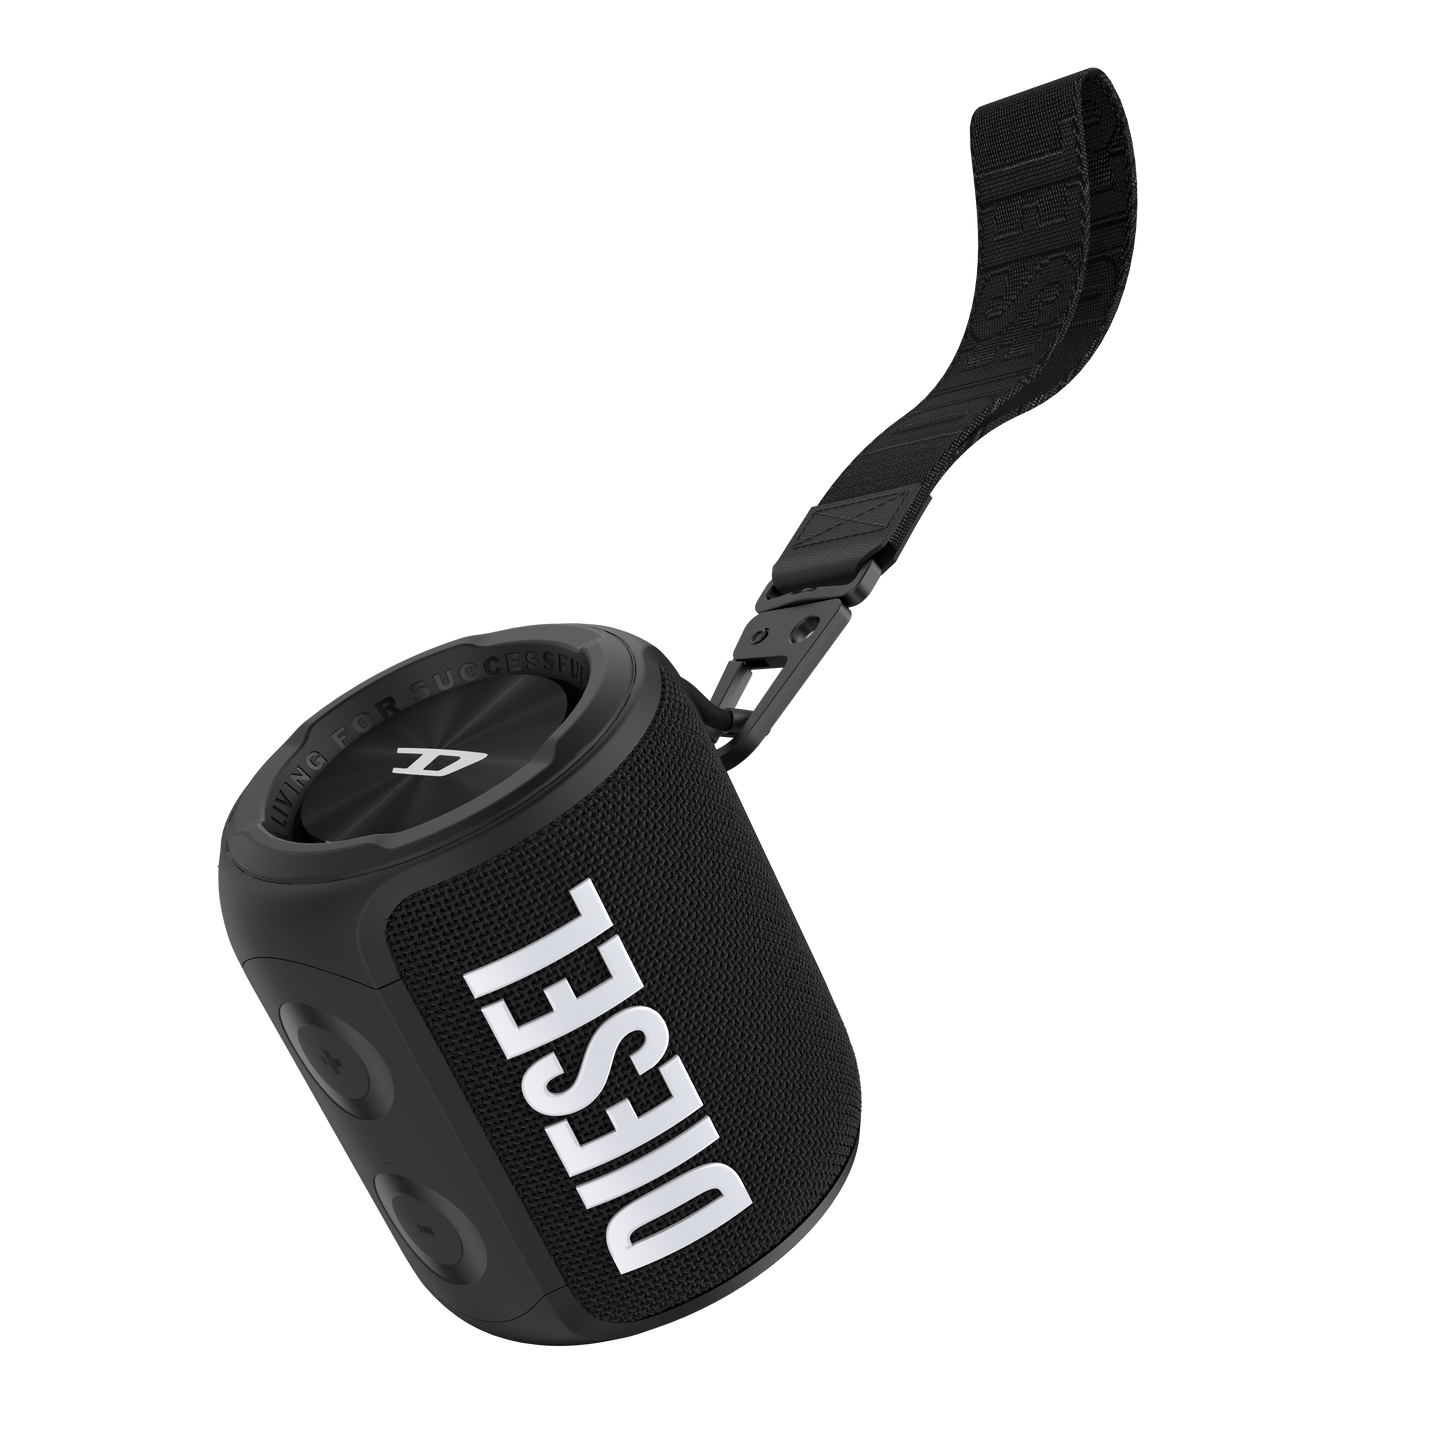 Diesel Audio Portable Bluetooth Wireless Speaker - Black